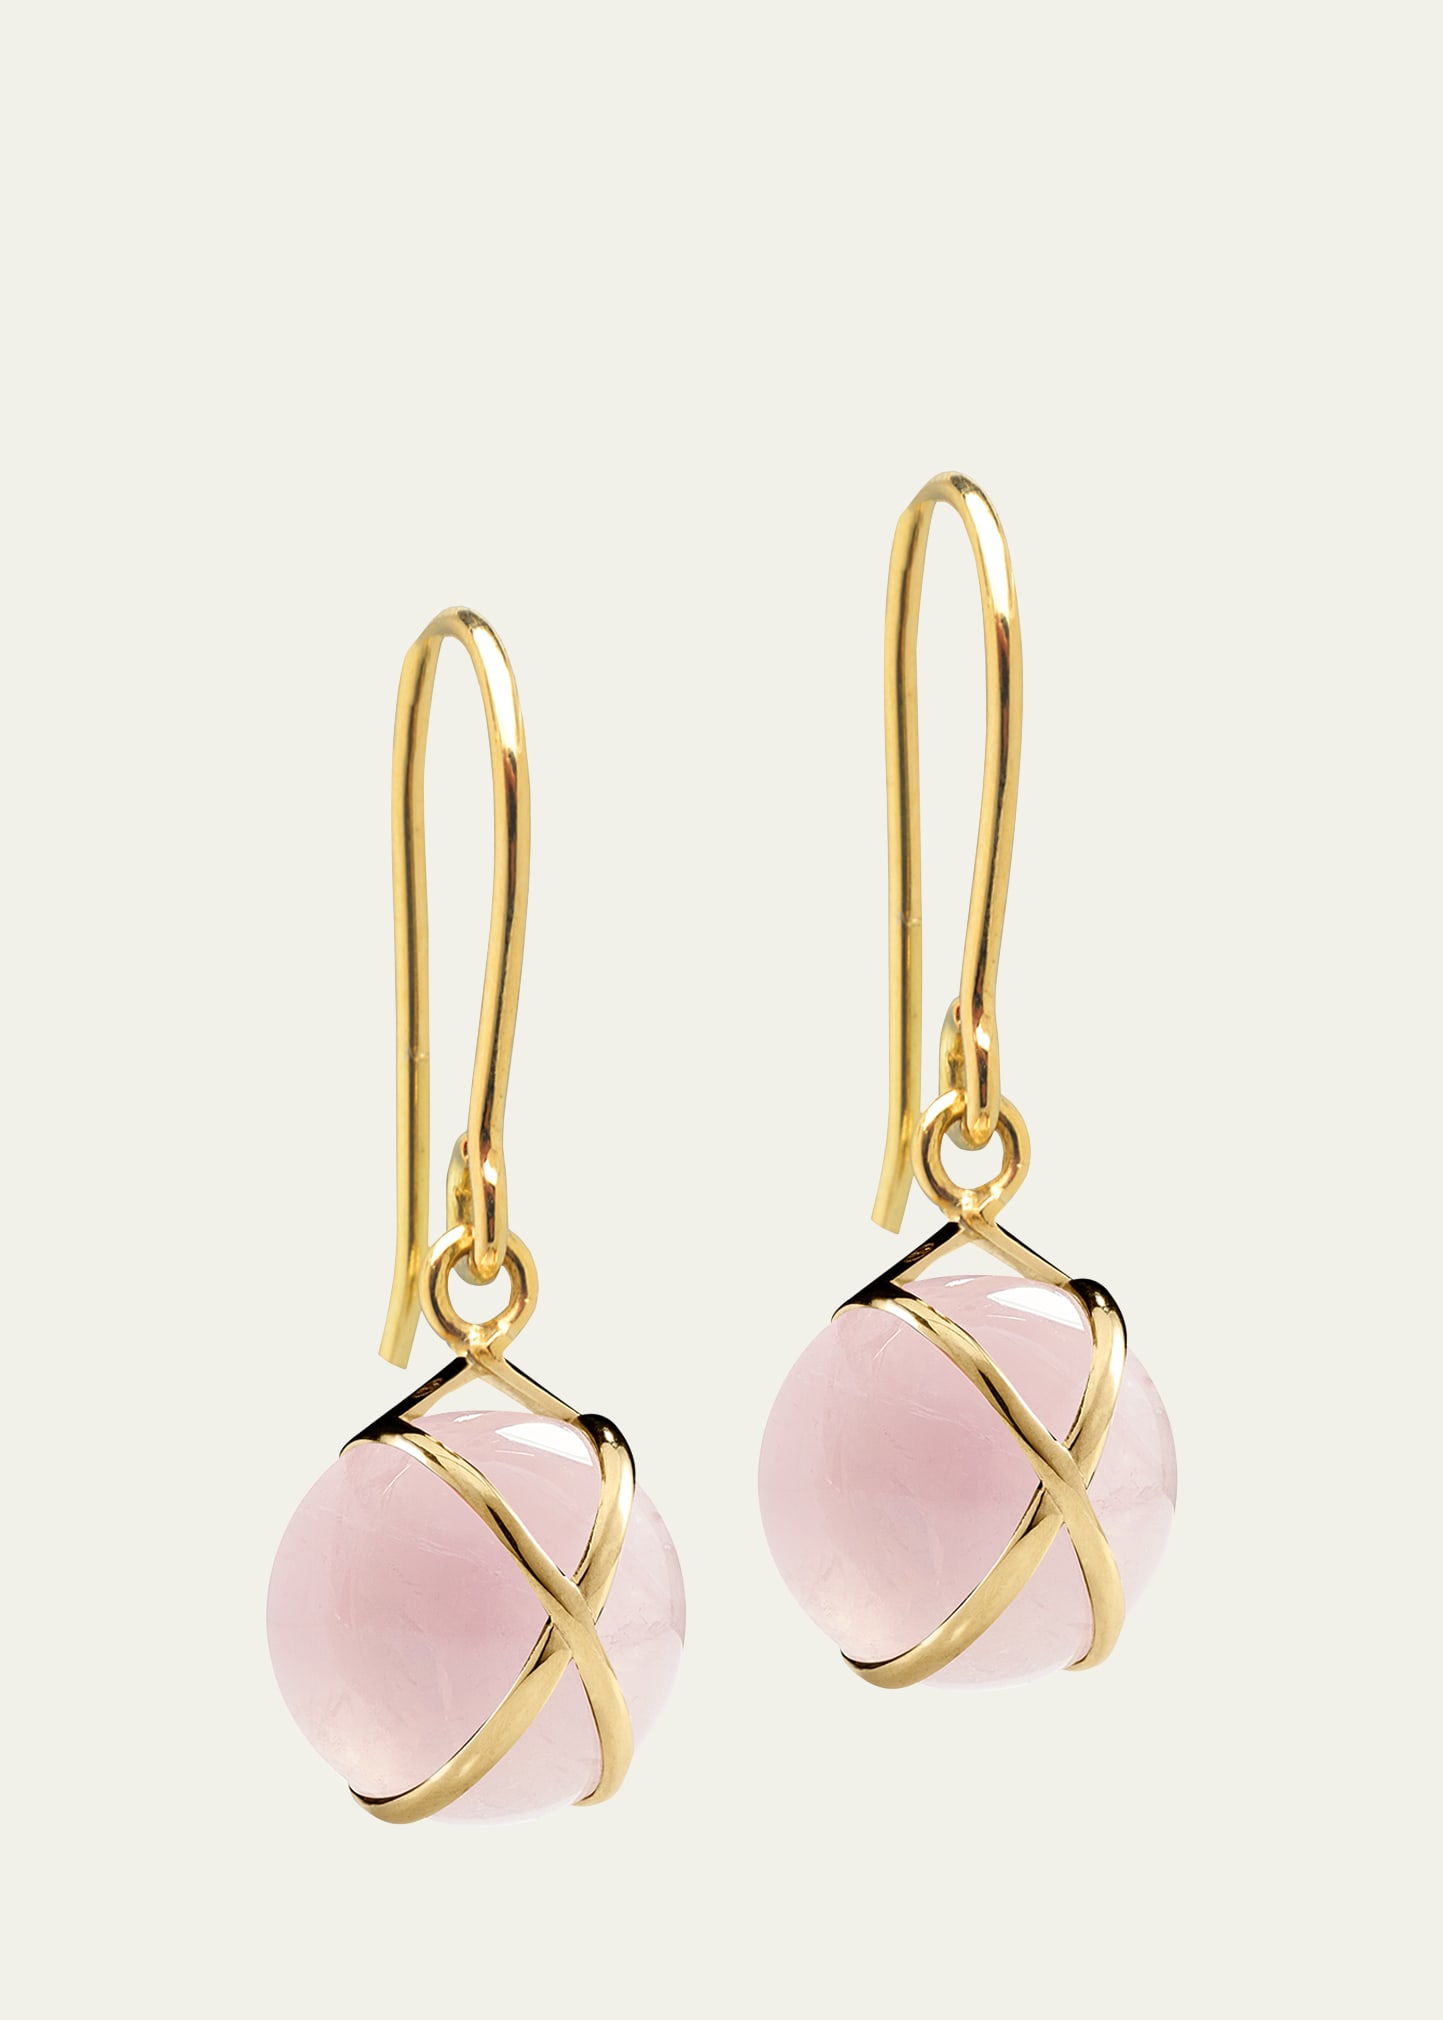 Prisma 18k Gold Drop Earrings with Rose Quartz